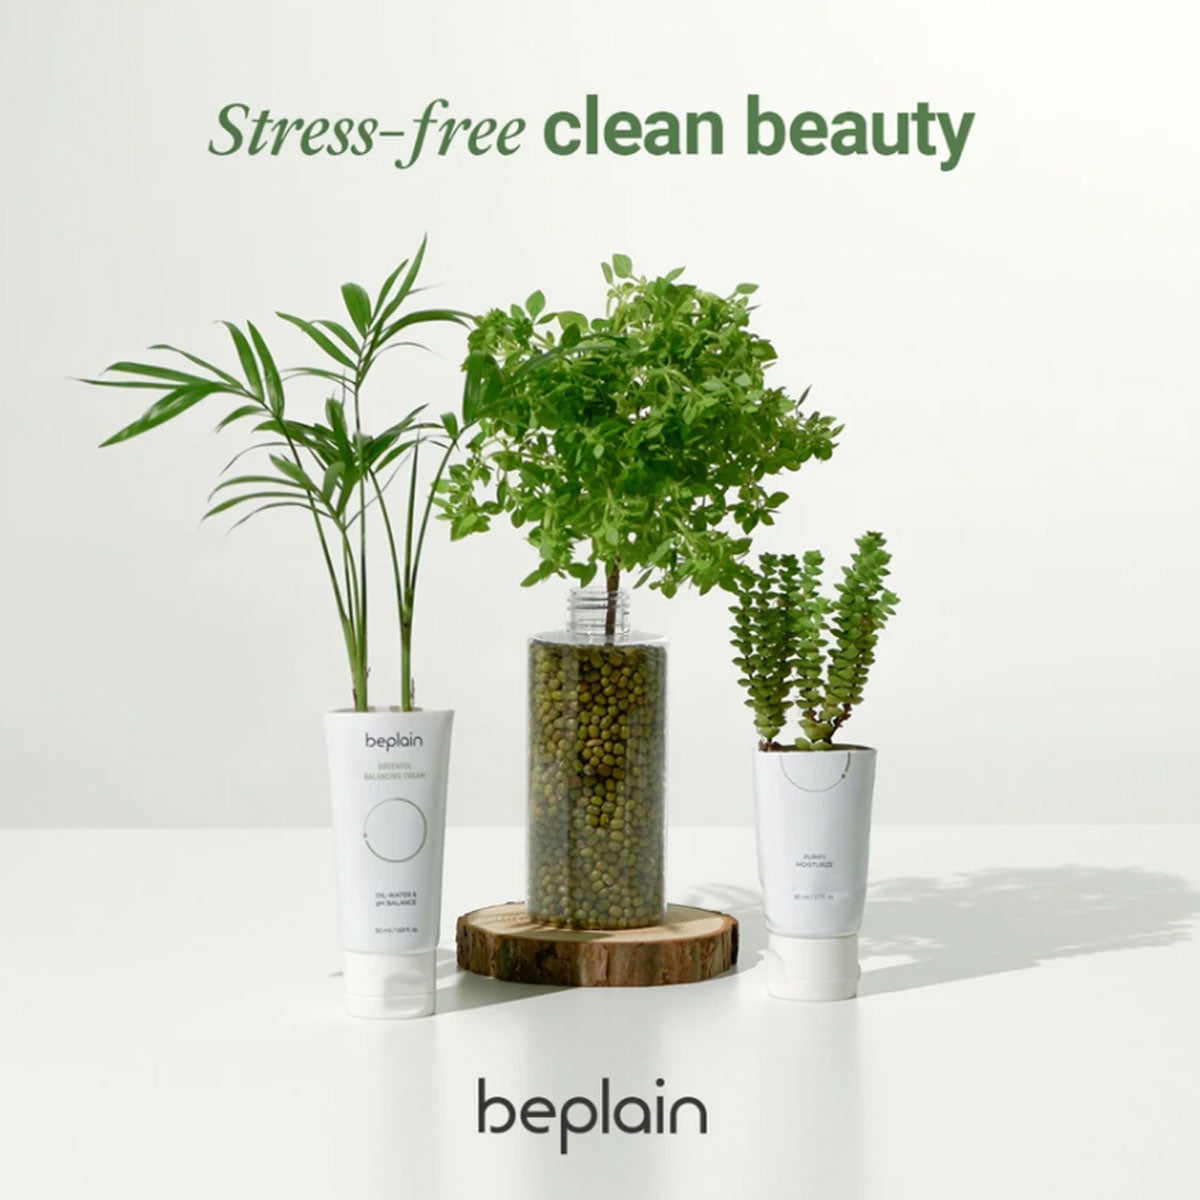 beplain - Greenful Balancing Toner - 200 ml